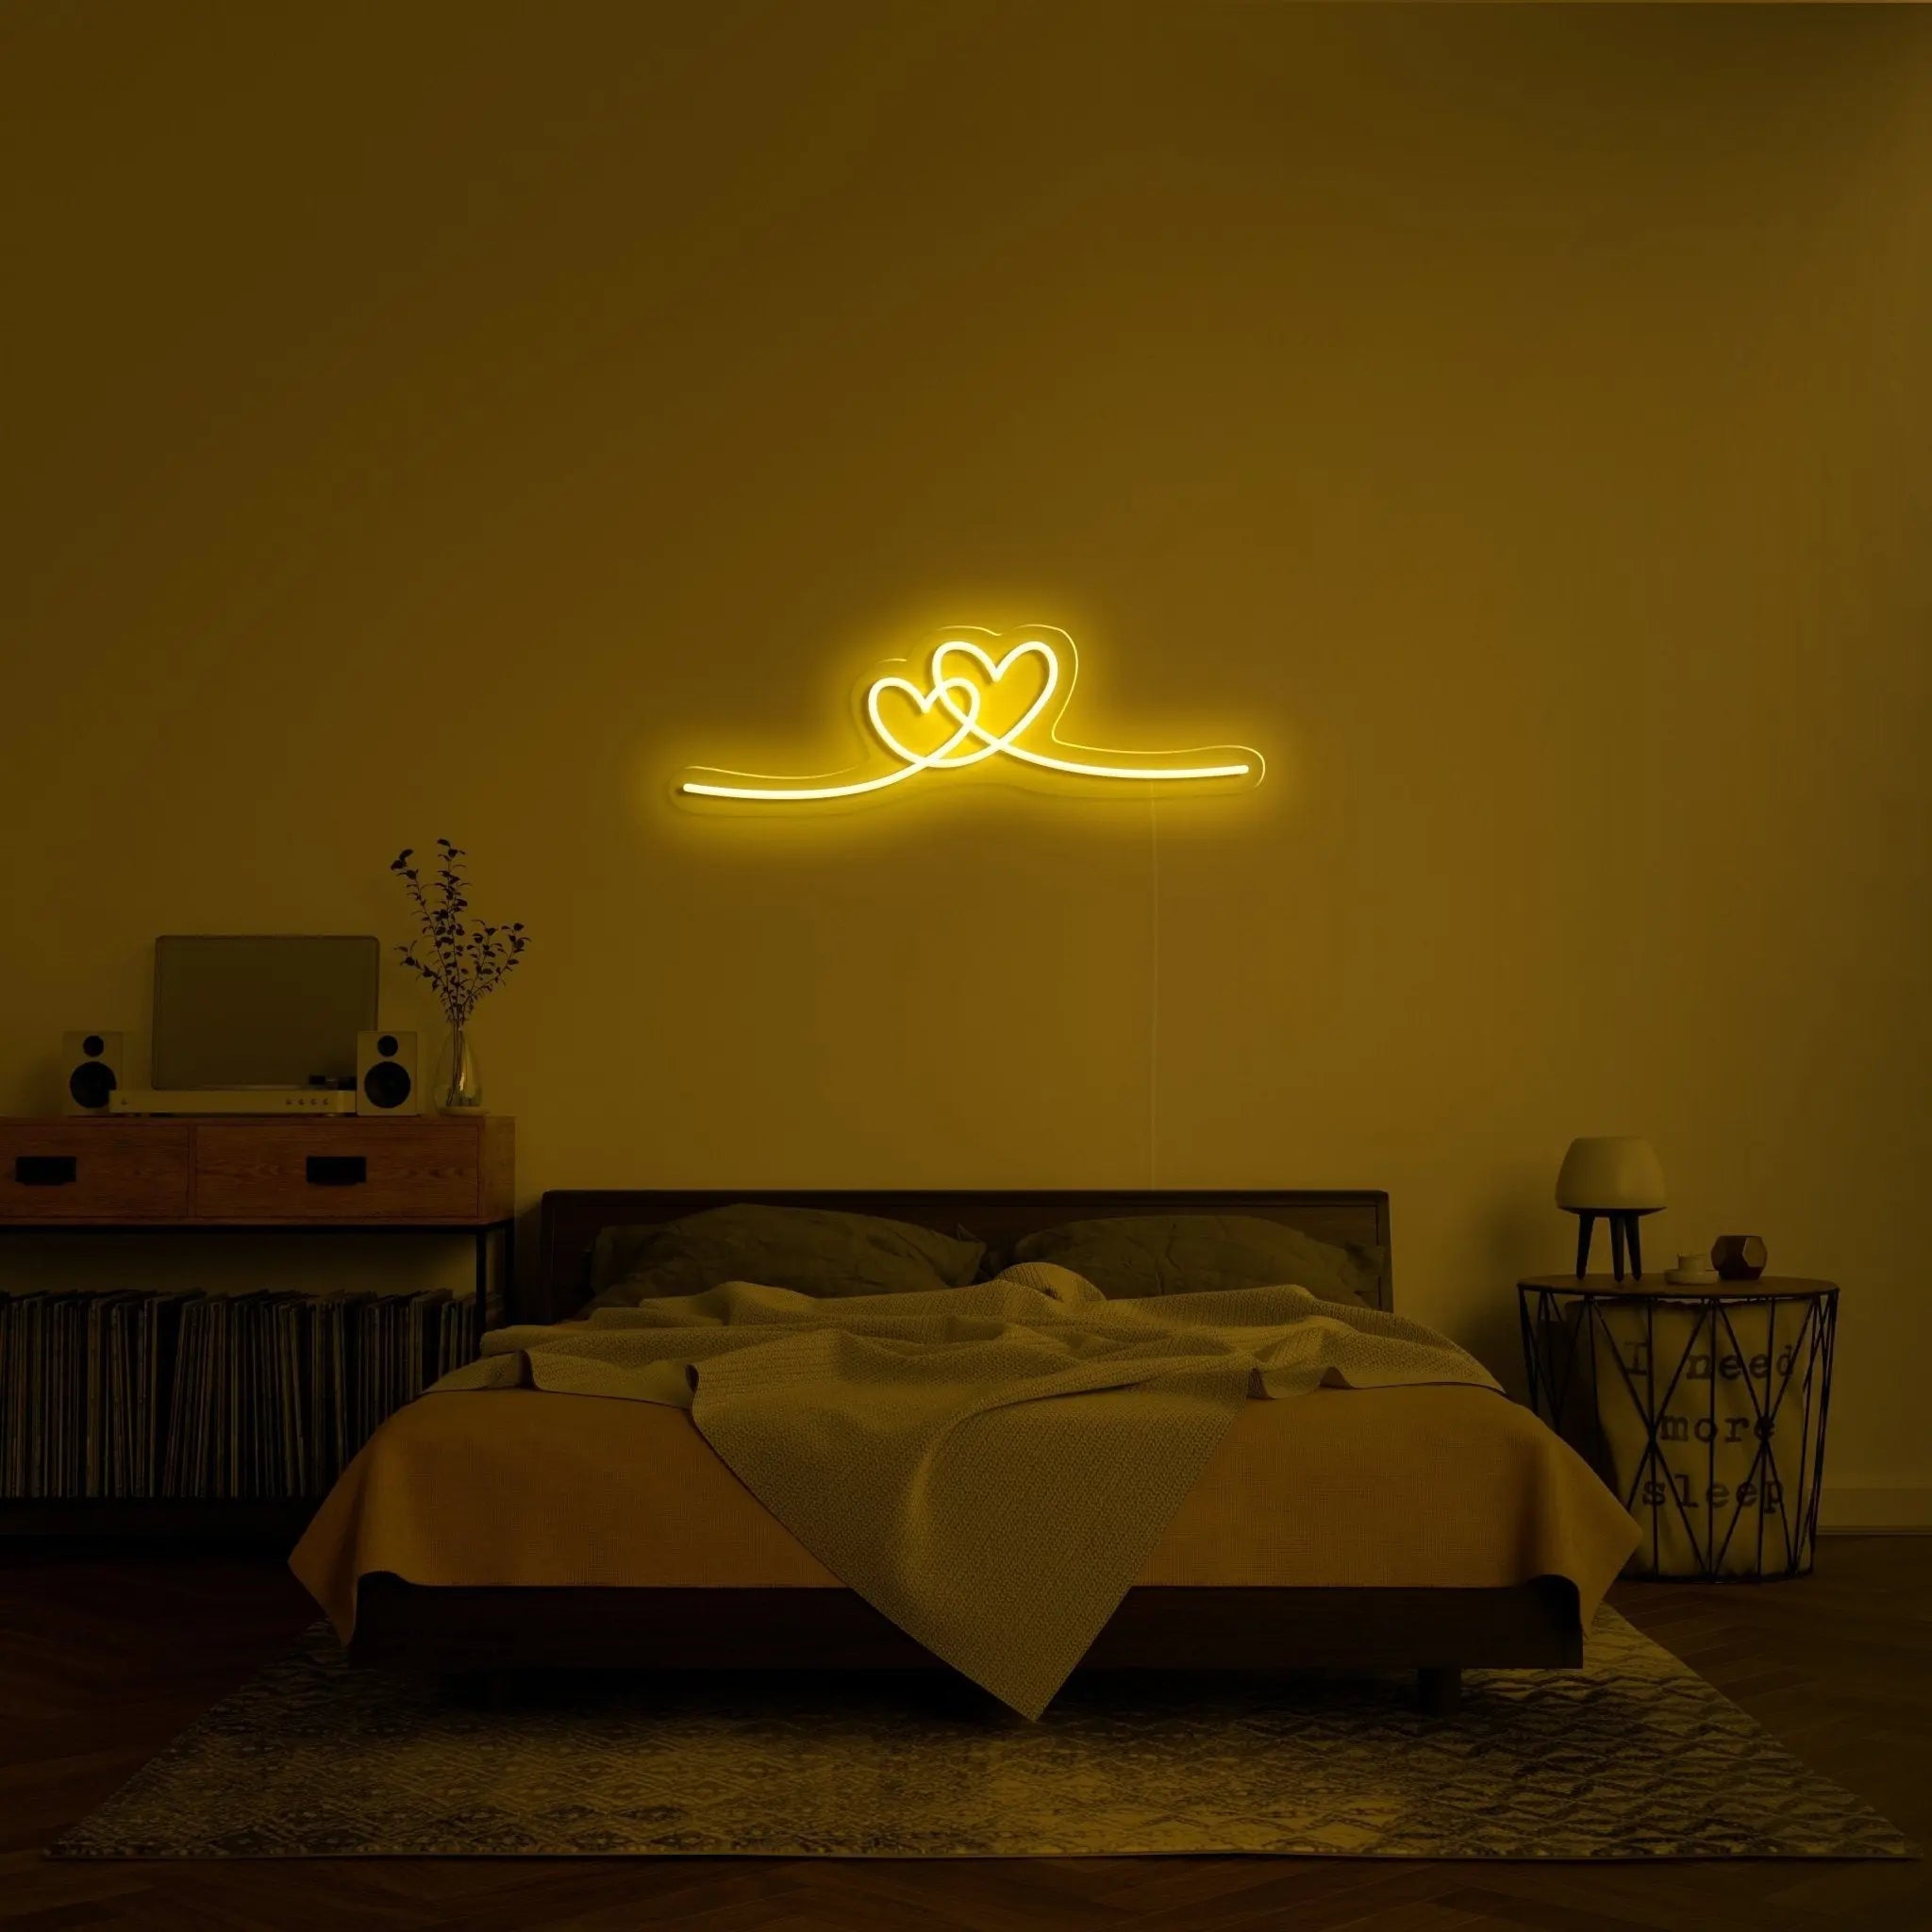 'Double Heart' LED Neon Sign - neonaffair